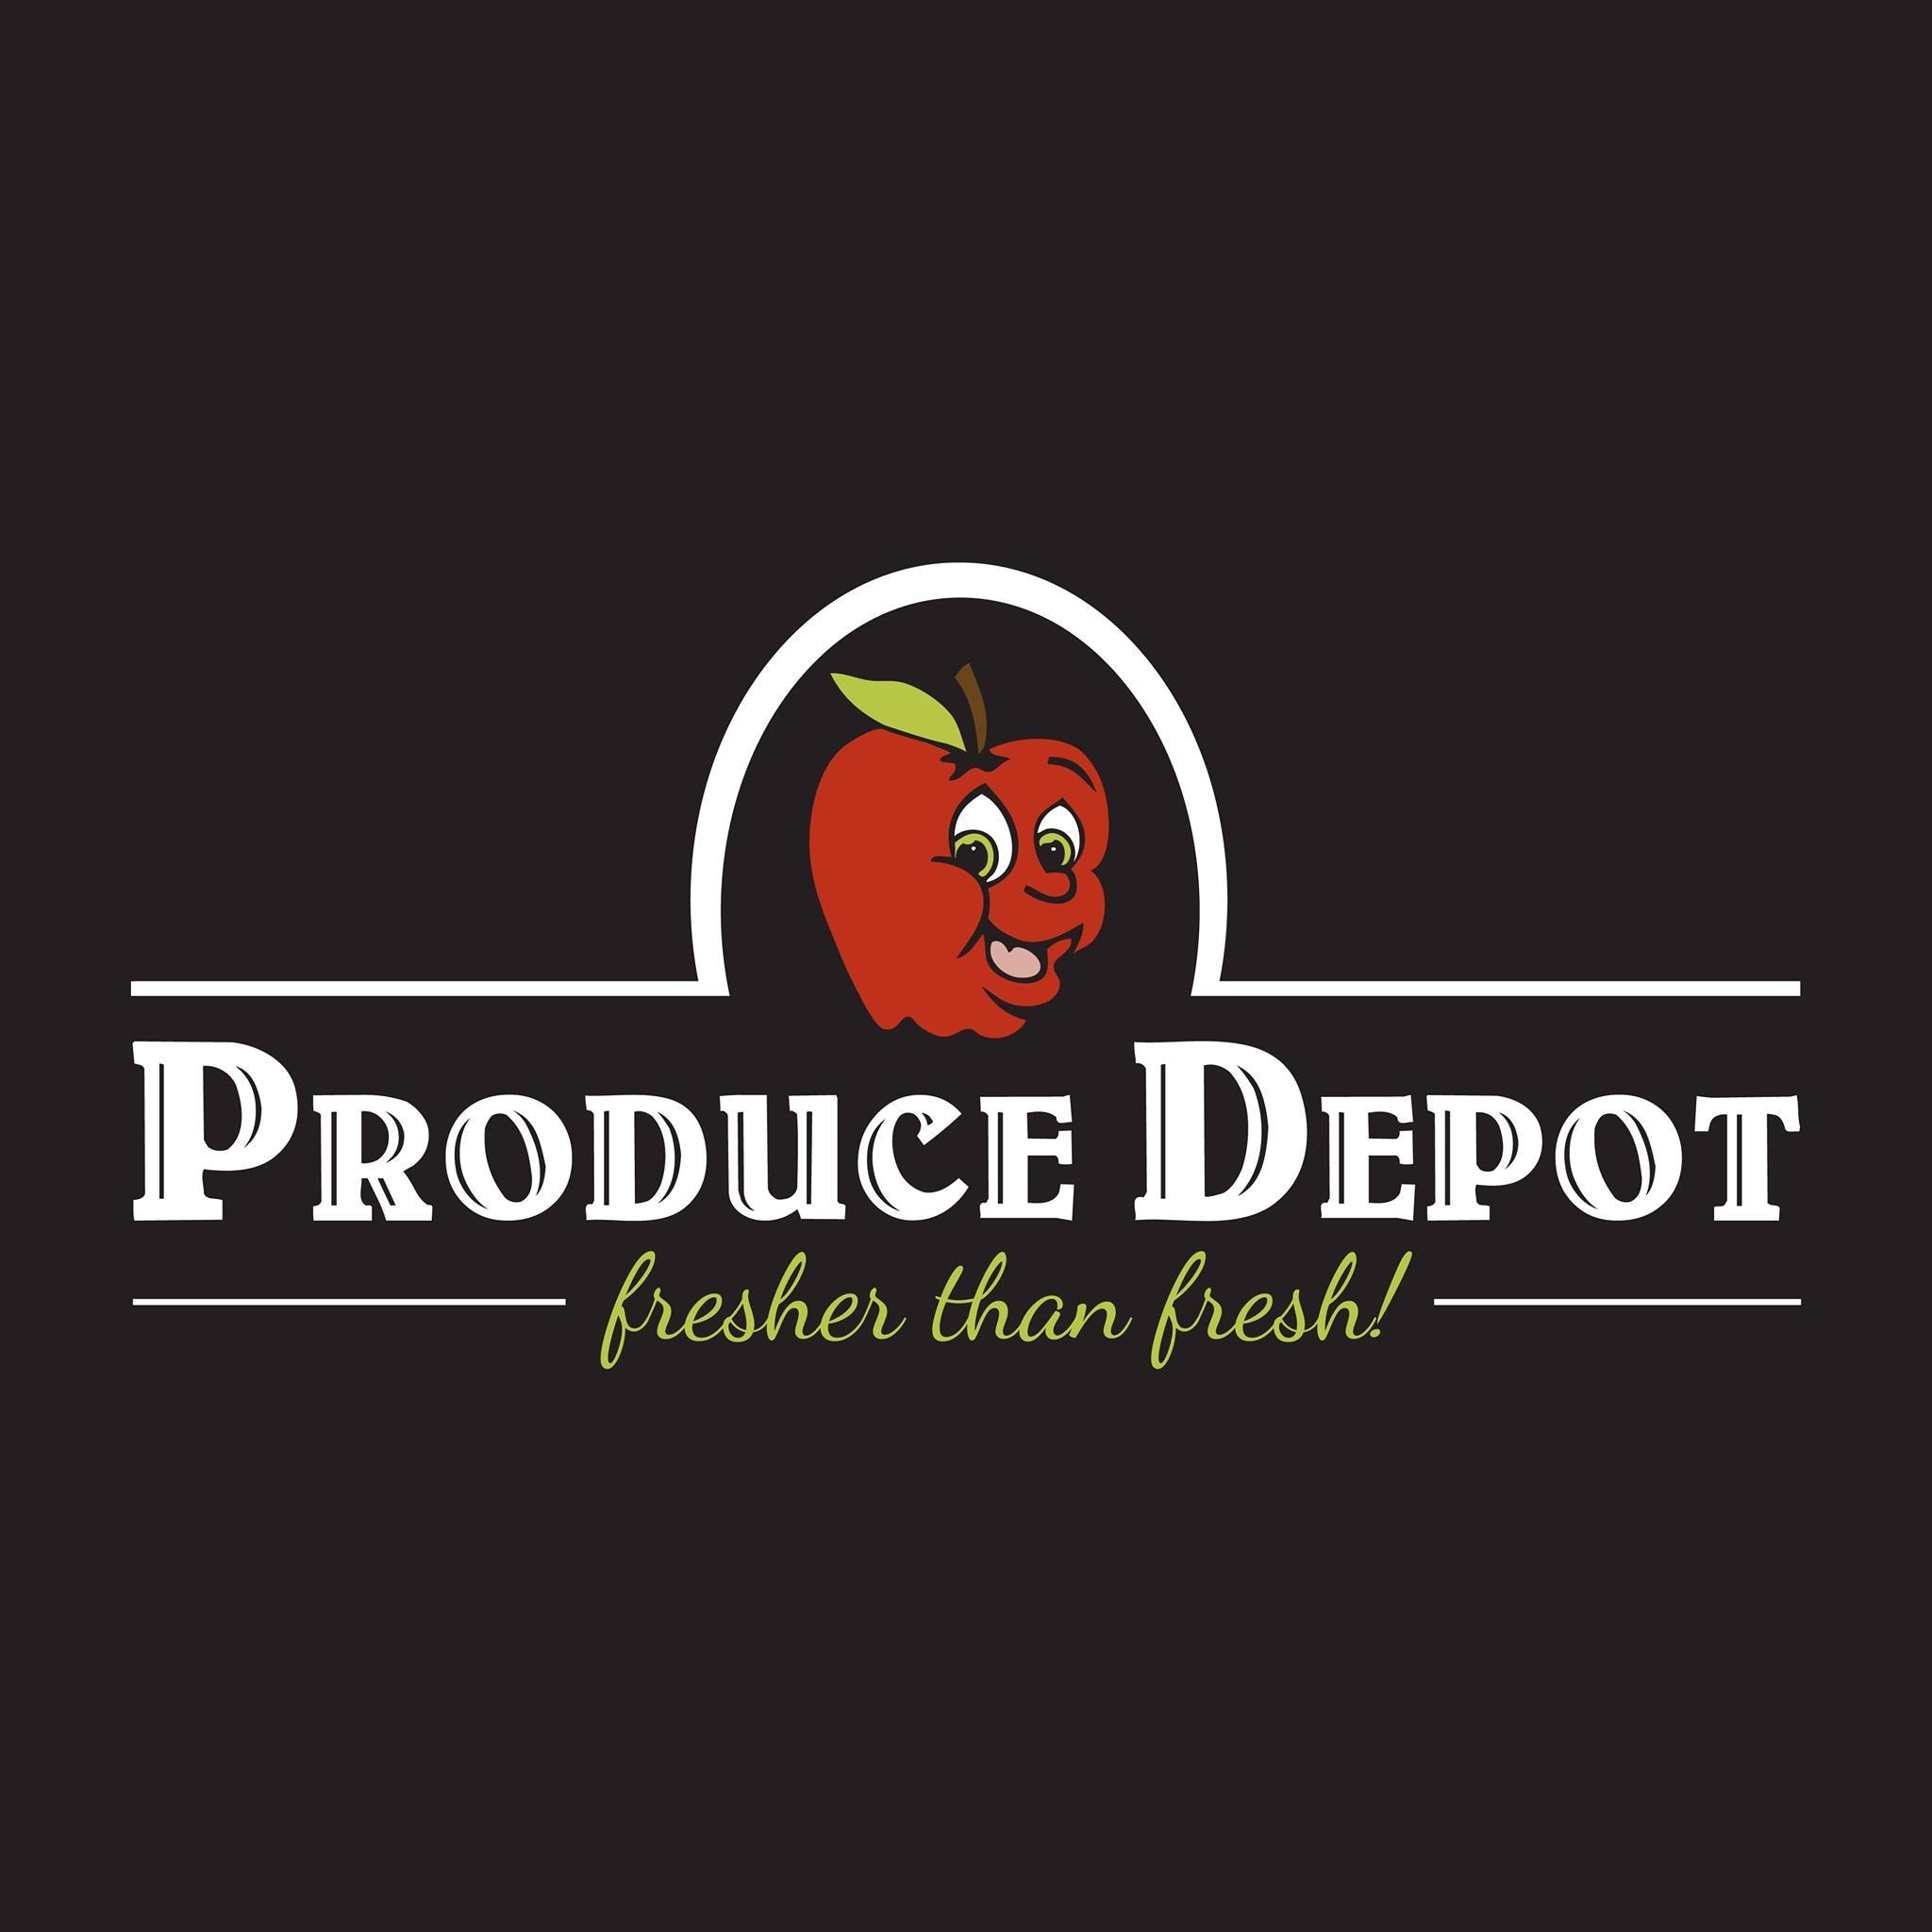 Produce Depot Logo